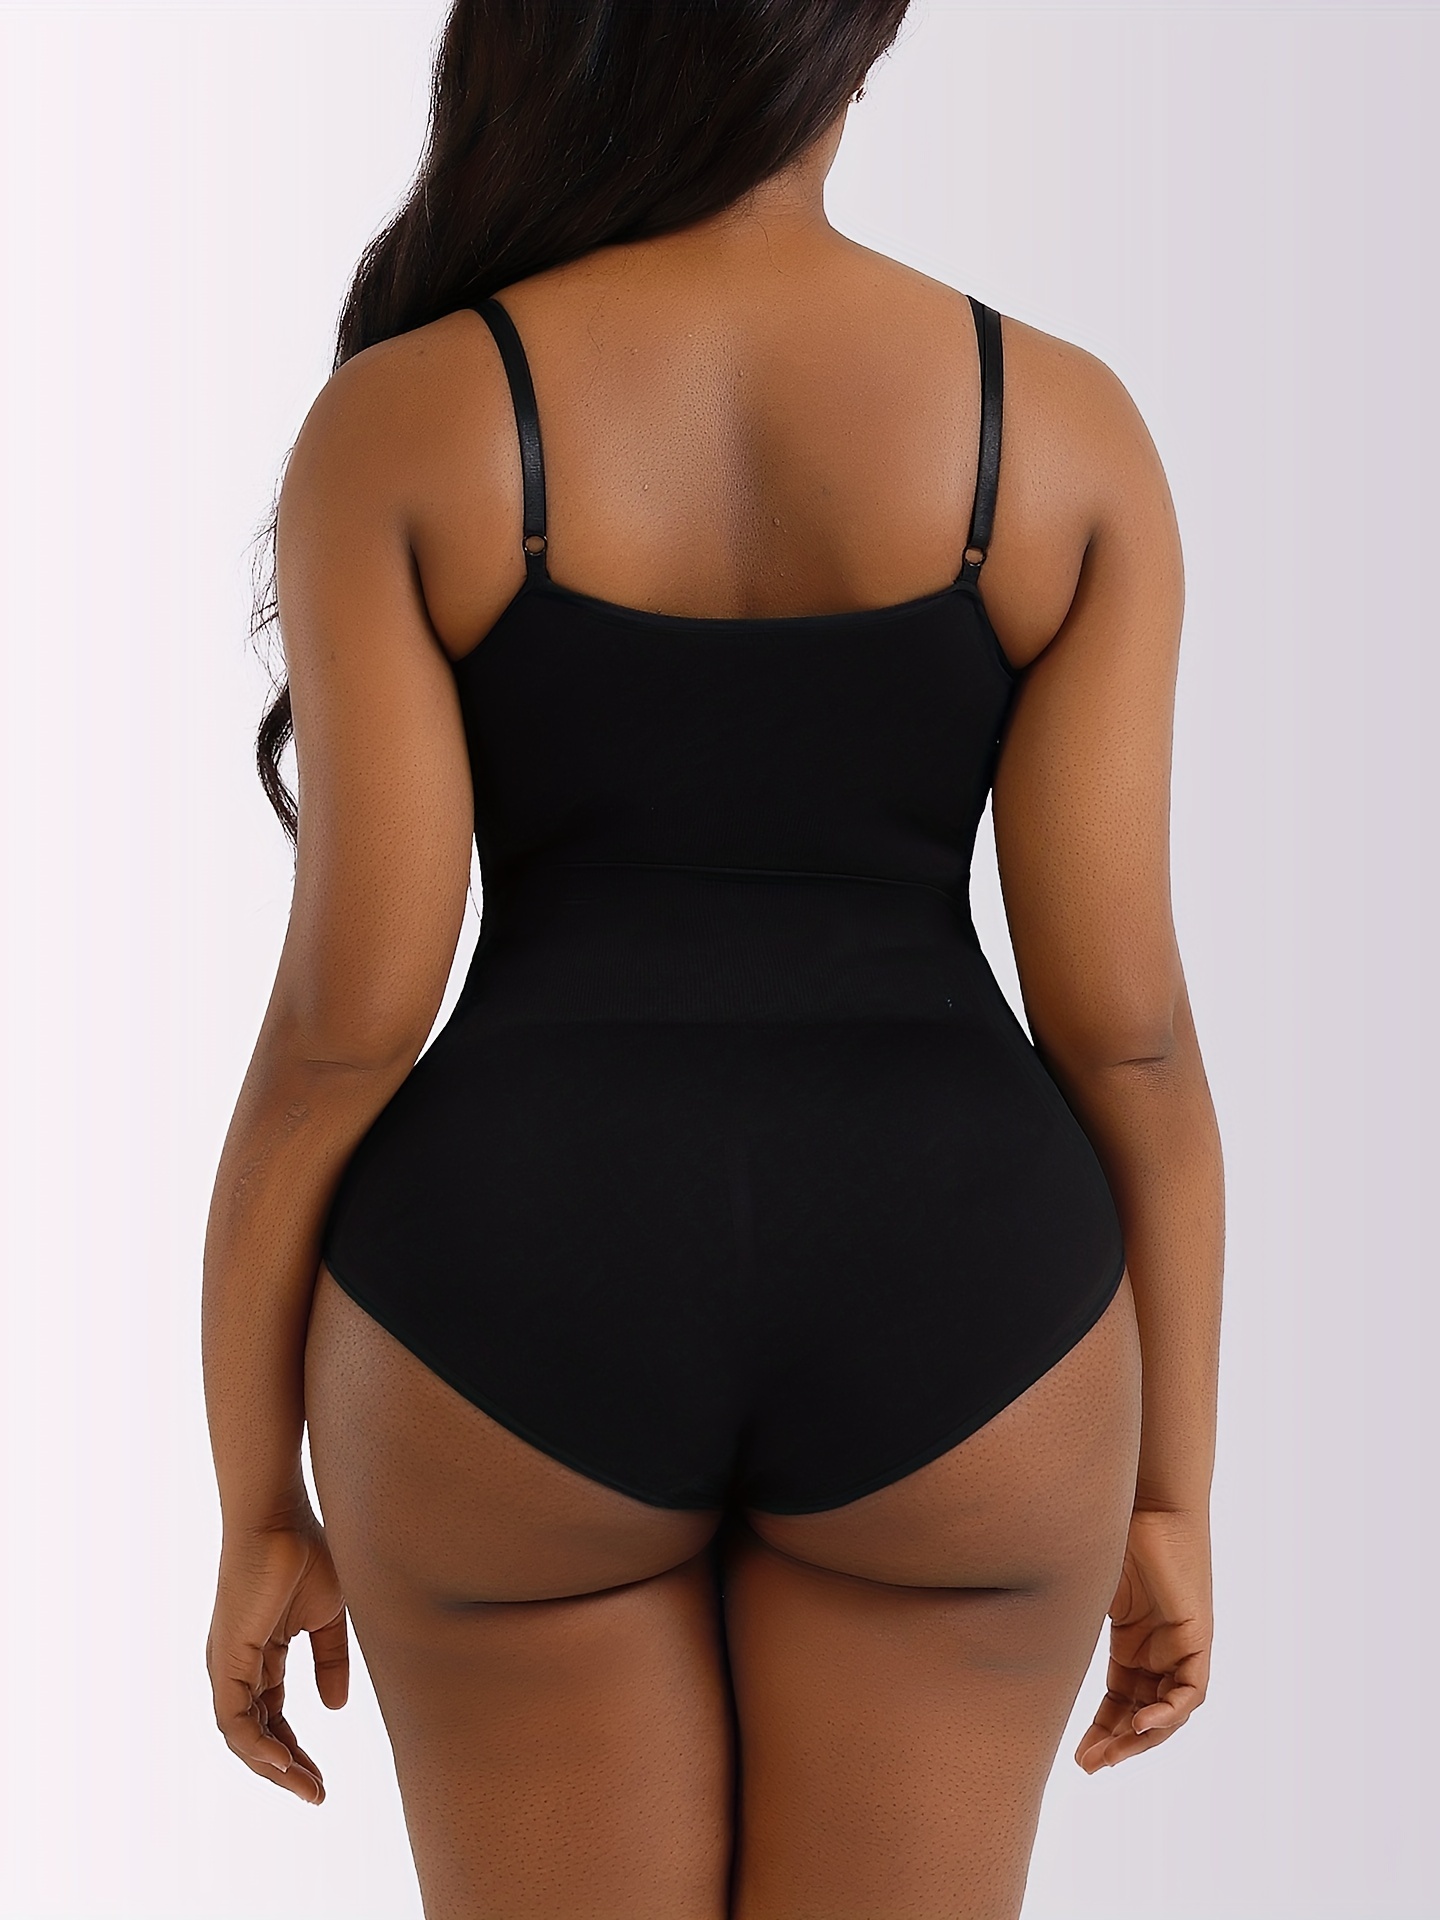 nsendm Female Underwear Adult Women Bodysuits Tops Women High Waist  Leggings Waist Pants Seamless Butt Lift Body Shaping Slimming Bodysuit  for(A, XL) 